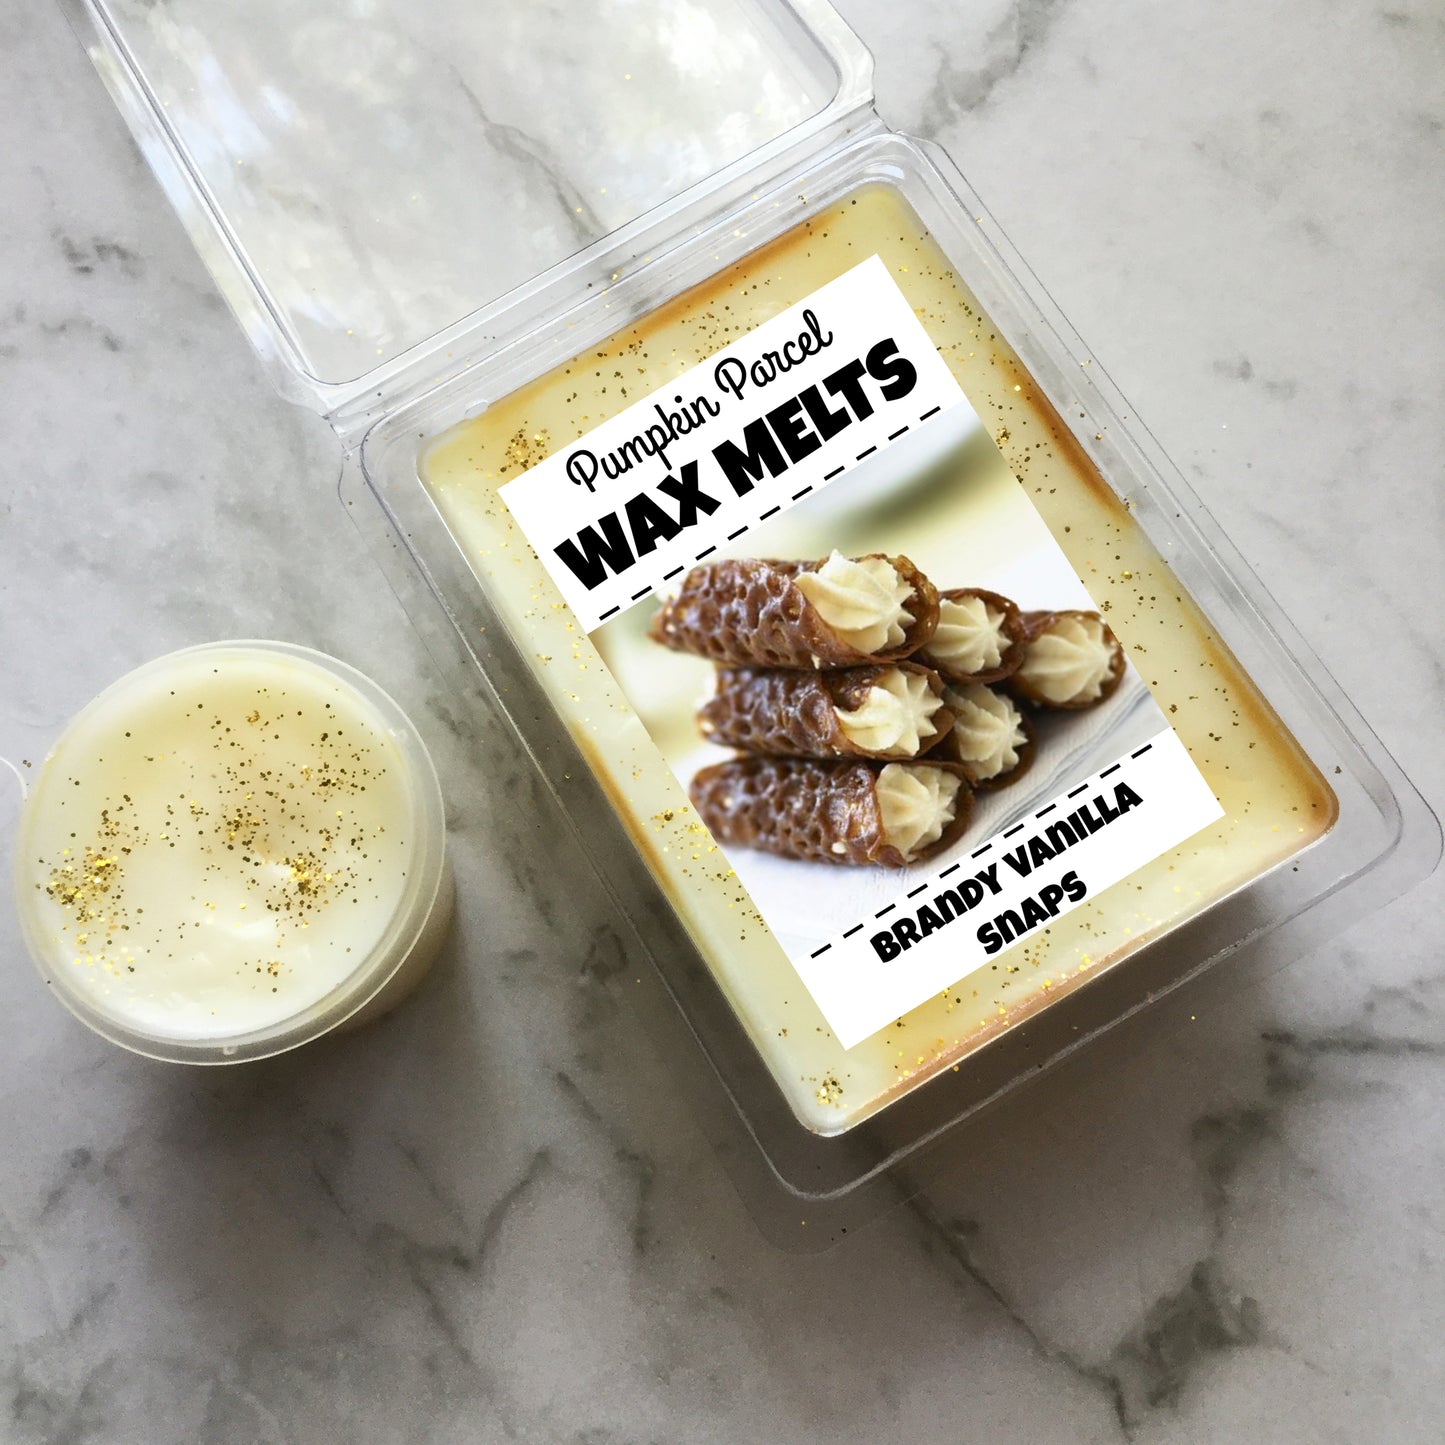 Brandy Vanilla Snaps Wax Melts